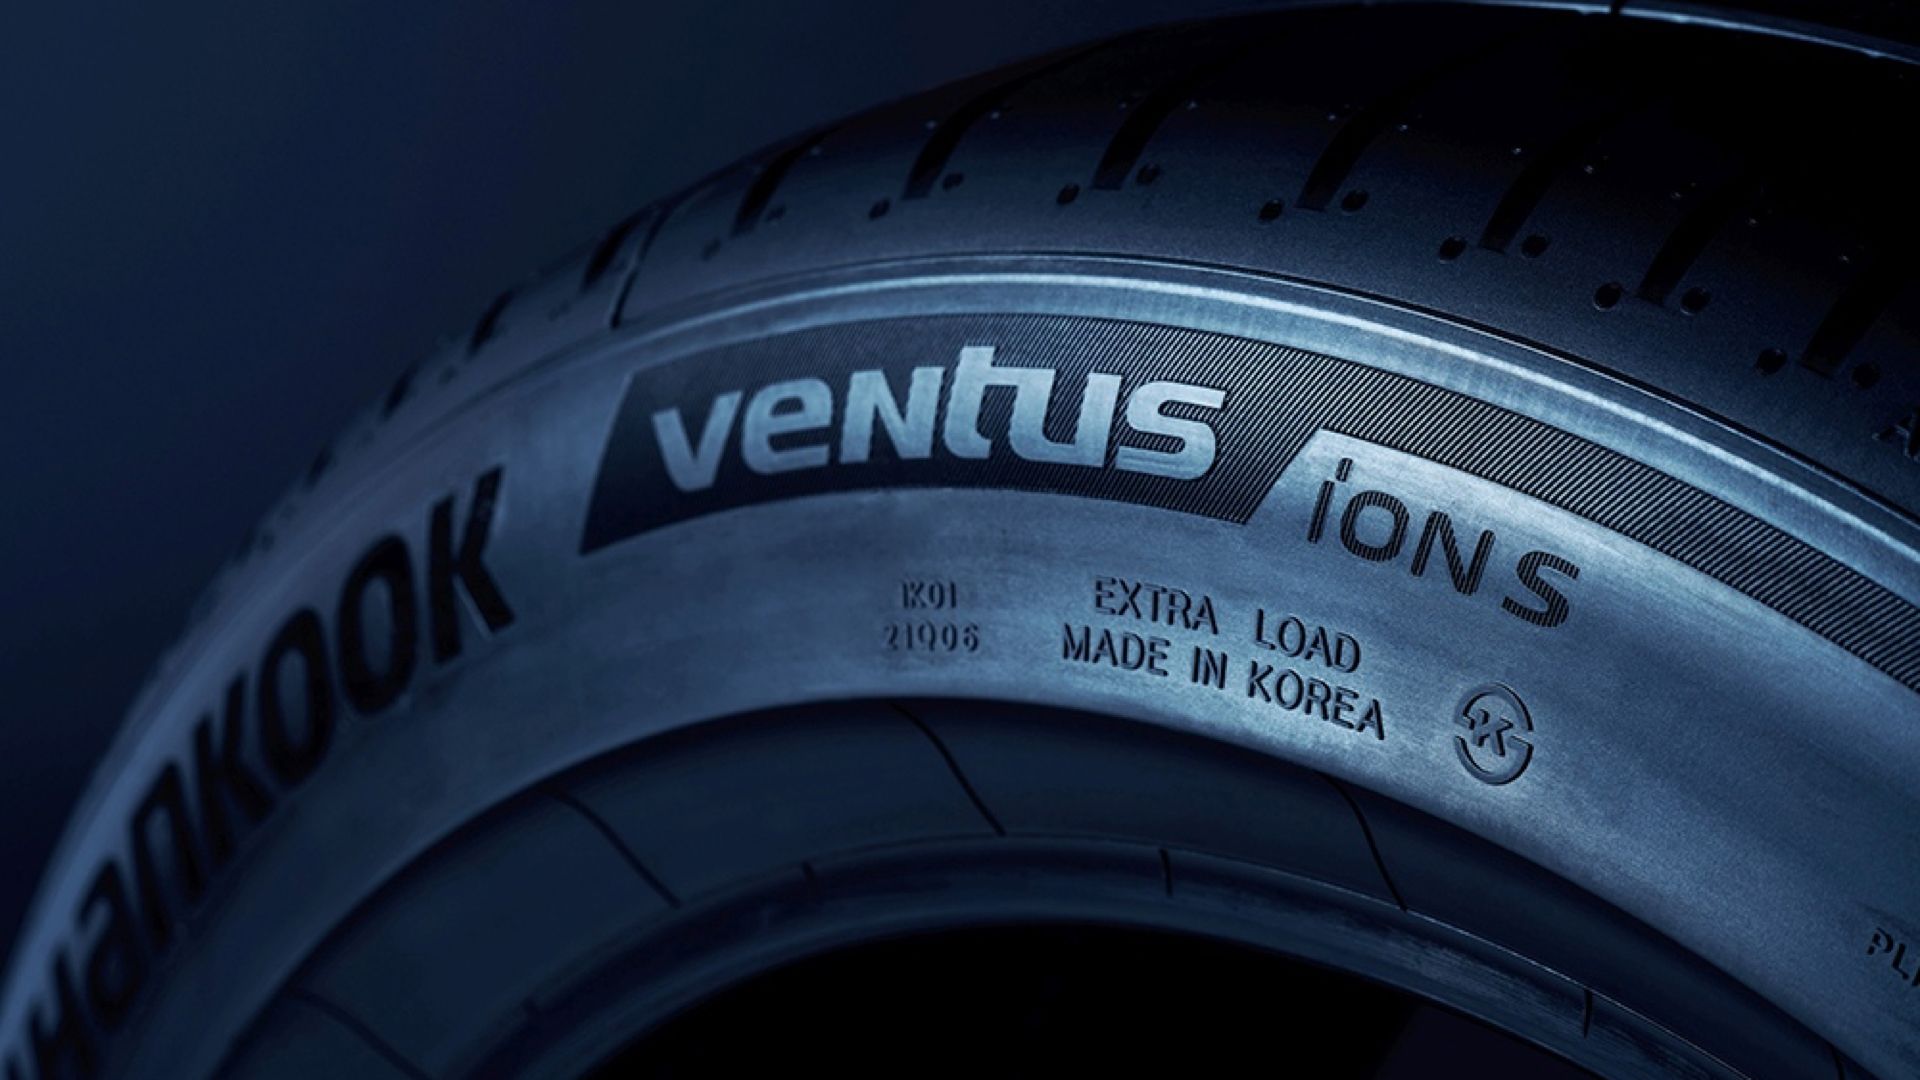 Hankook tire built for EVs